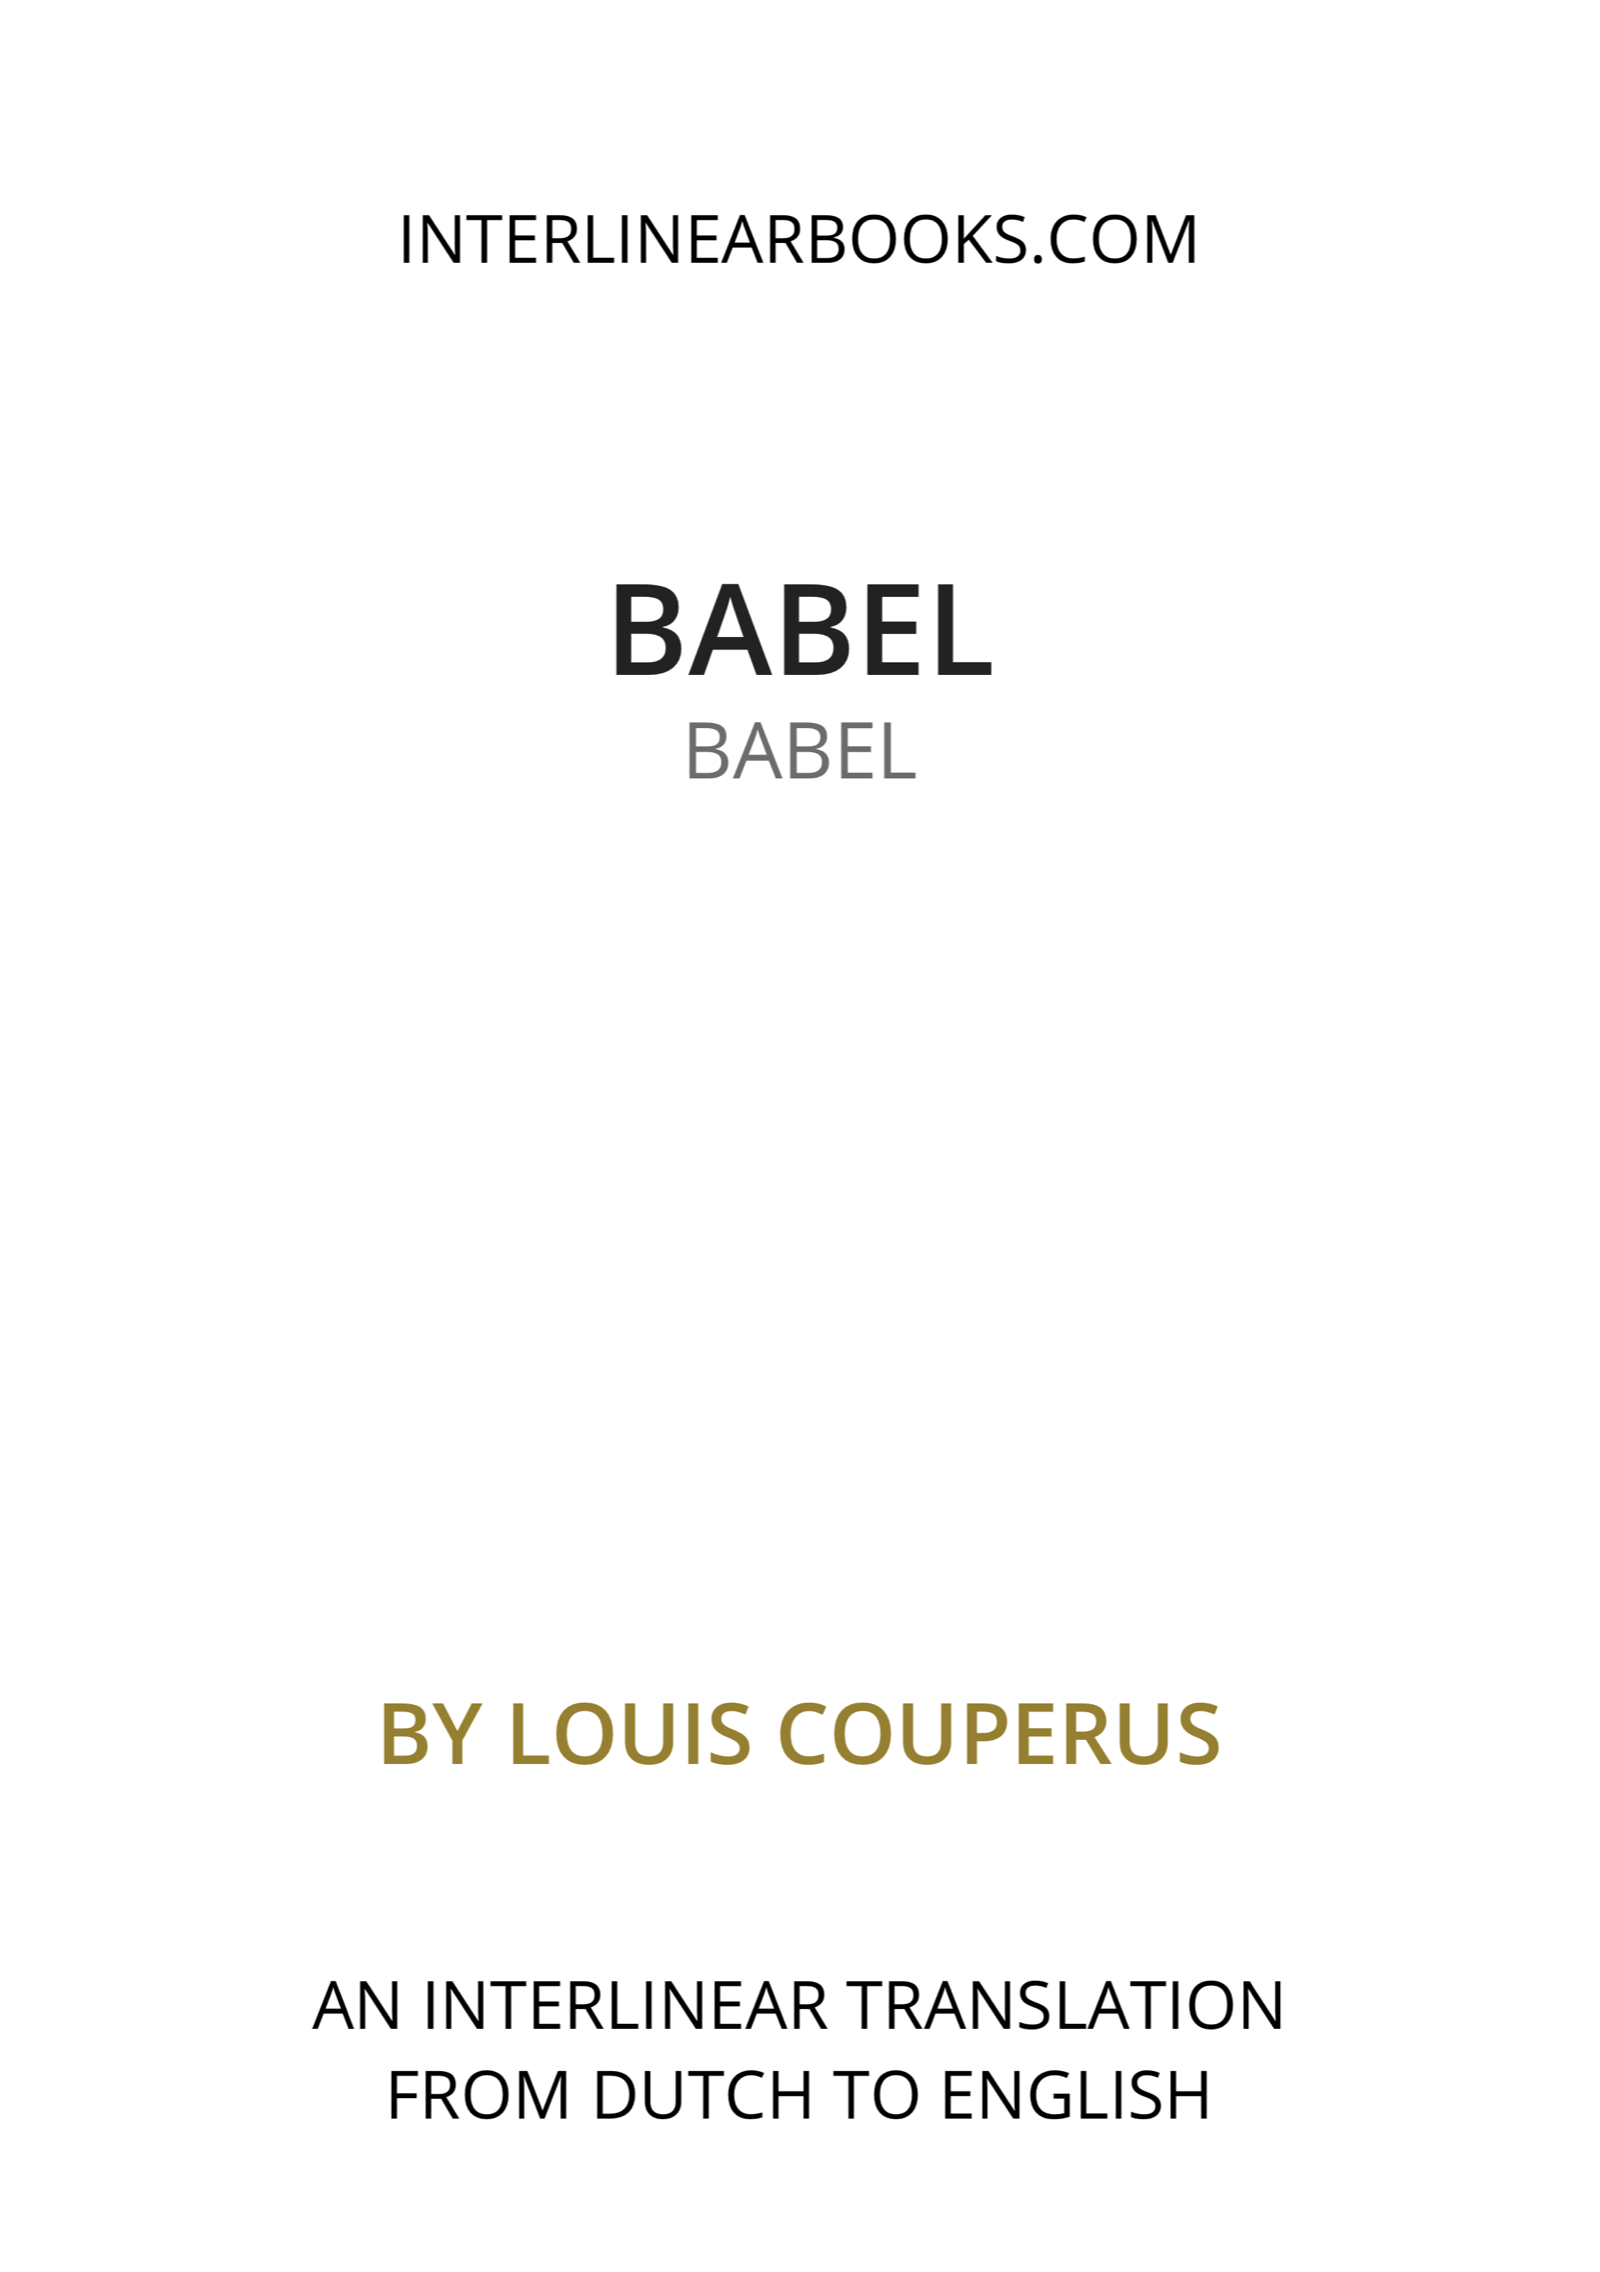 Dutch book: Babel / Babel